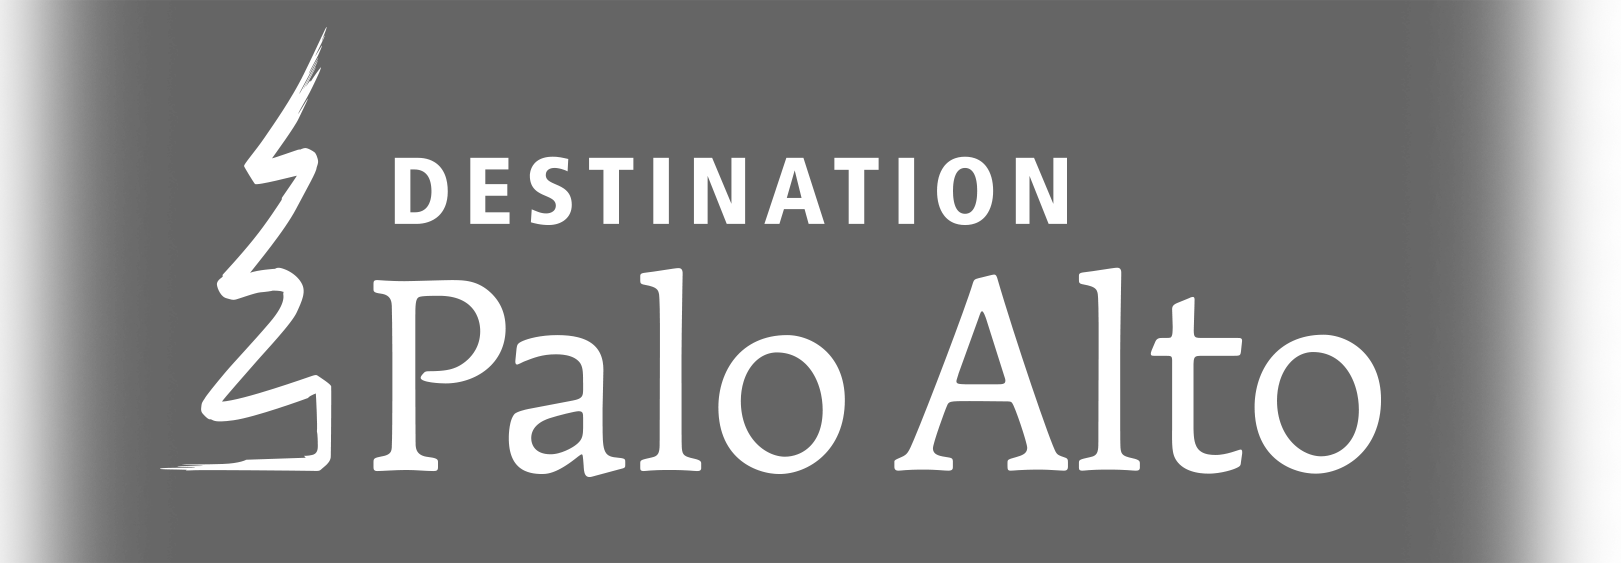 Destination Palo Alto logo